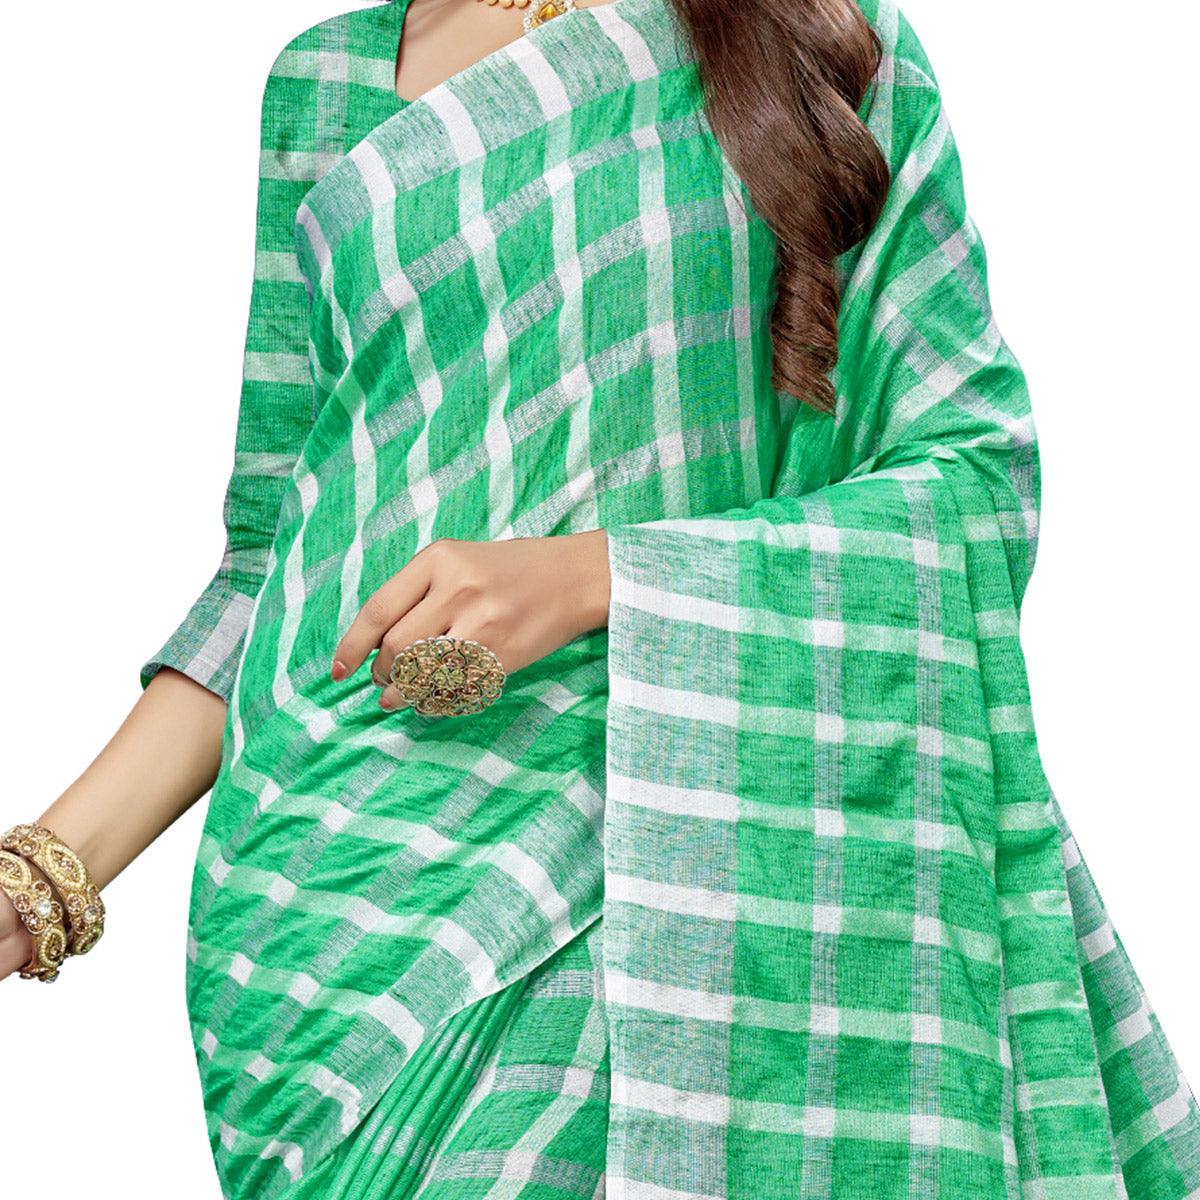 Marvellous Green Colored Fesive Wear Checks Print Cotton Silk Saree With Tassels - Peachmode